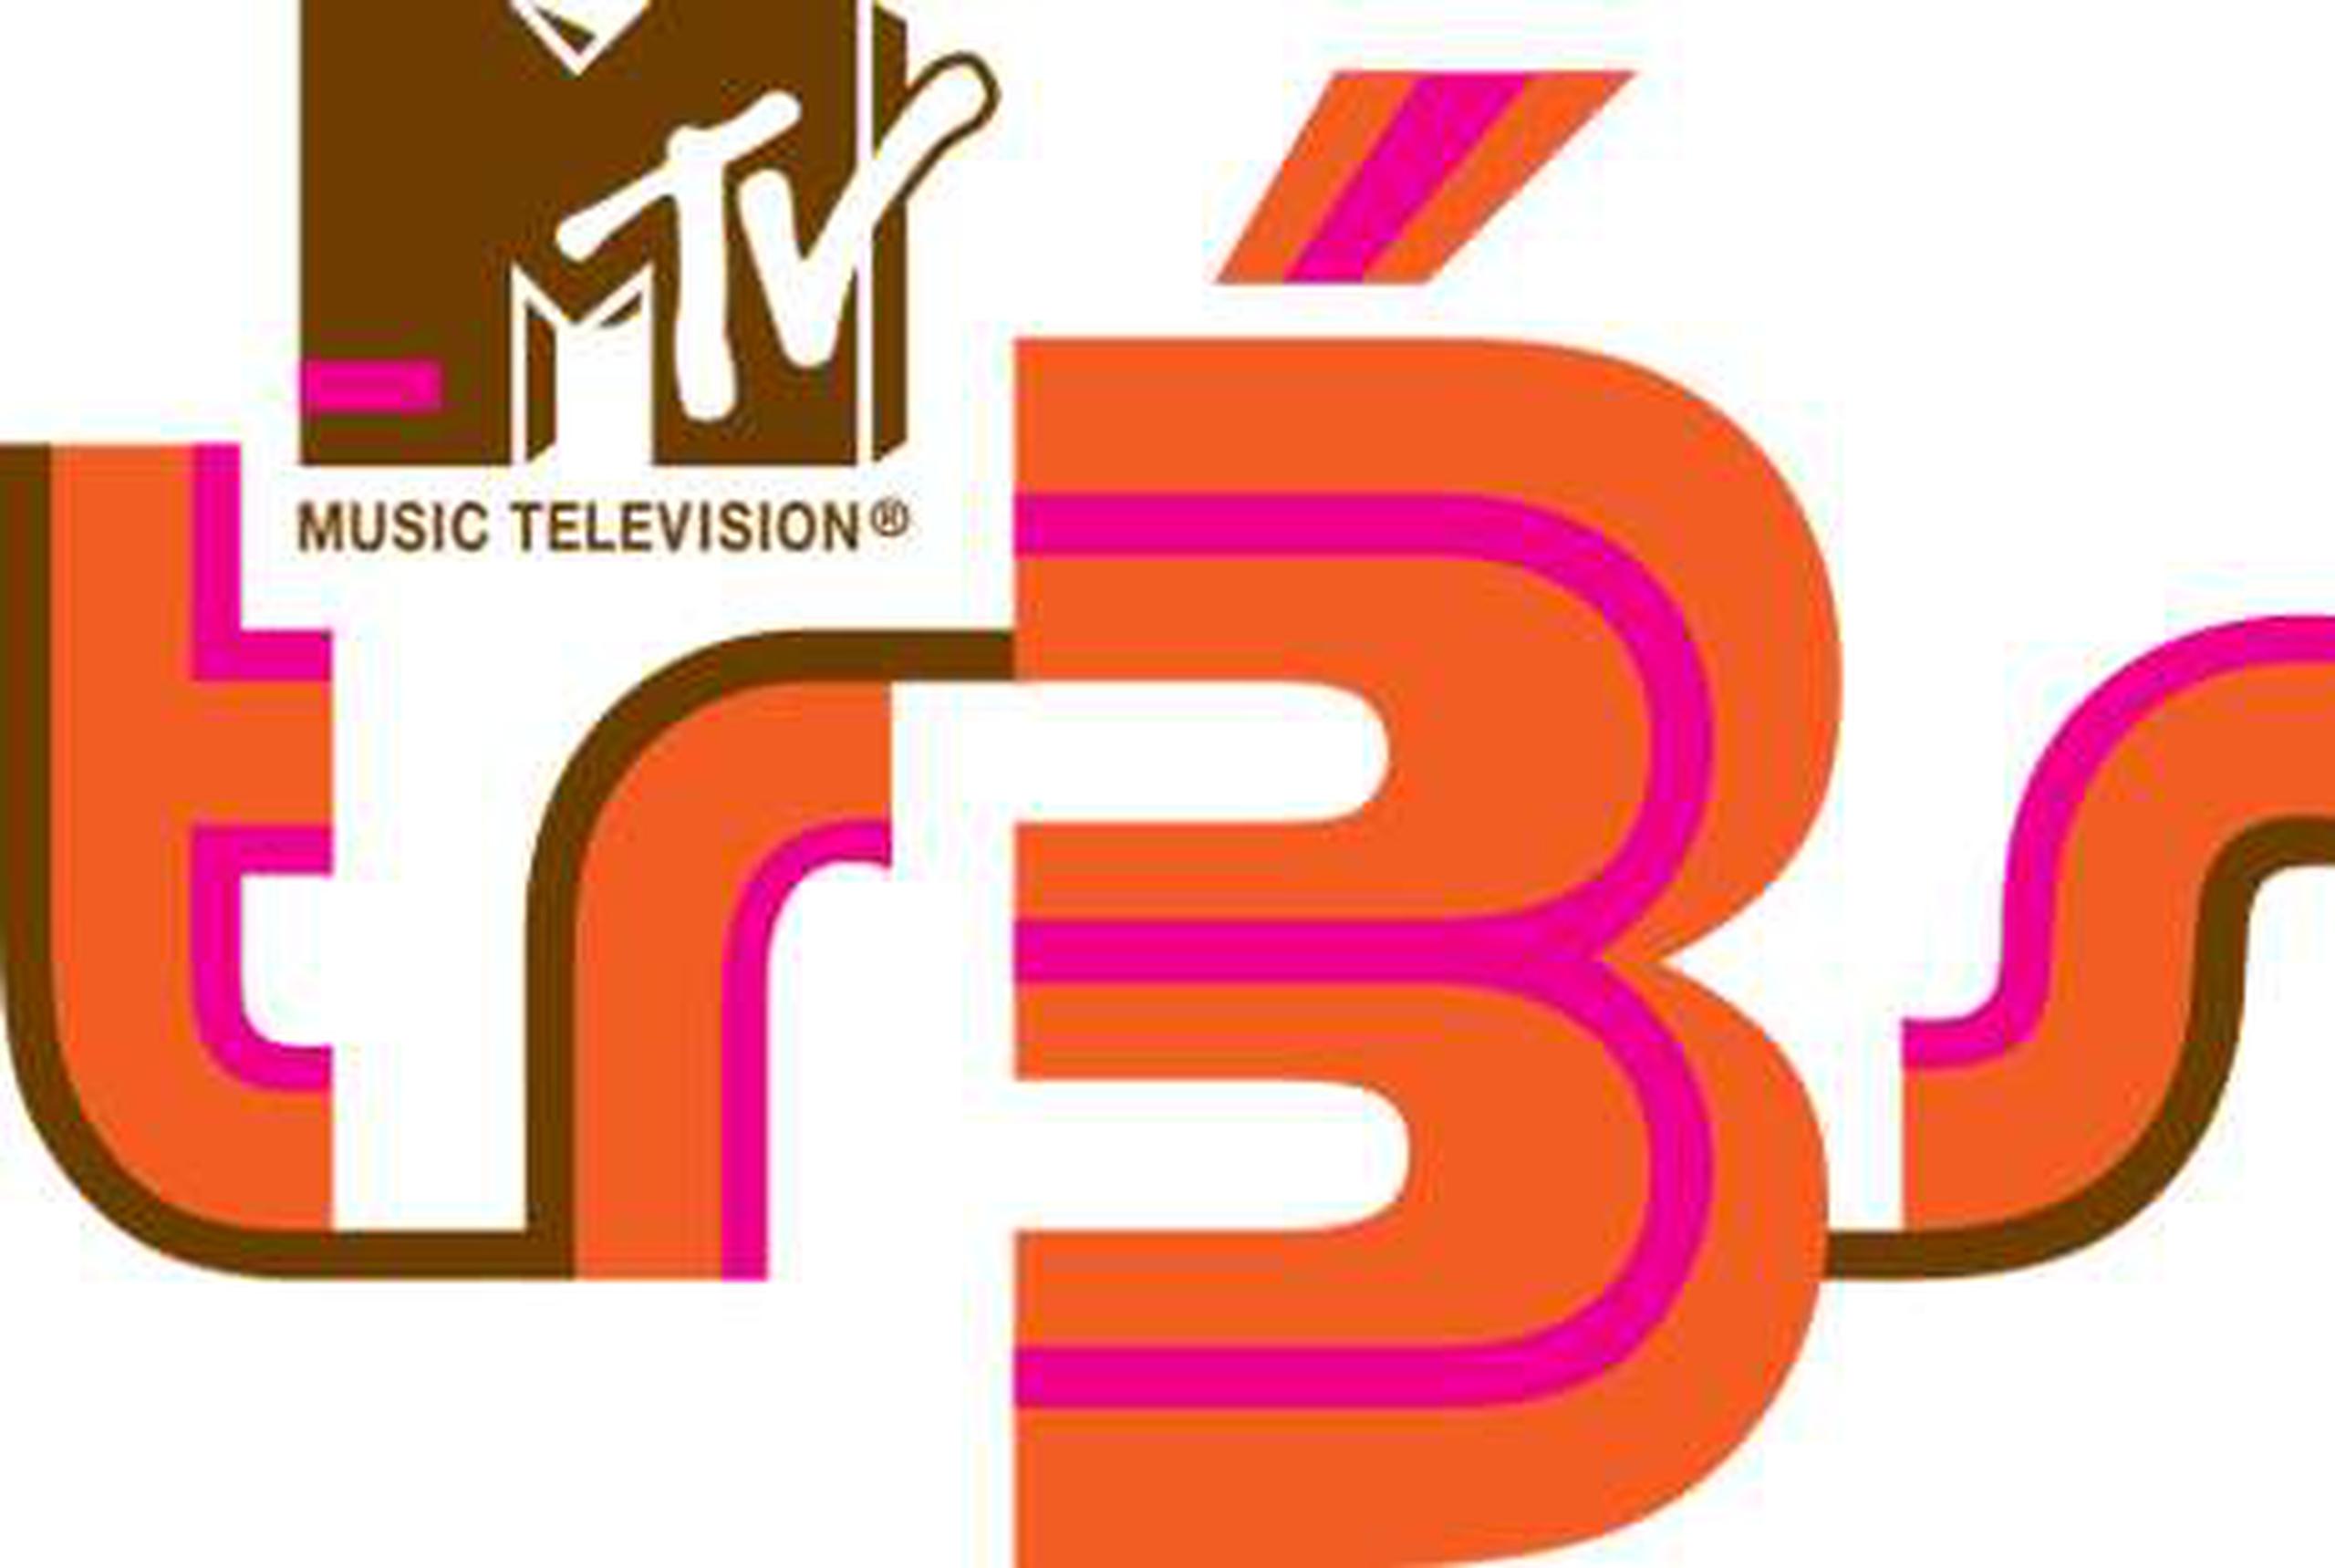 JJ Jackson, Nina Blackwood, Mark Goodman, Martha Queen y Alan Hunter fueron los primeros “Vj” de MTV.&nbsp;<font color="yellow">(Archivo)</font>